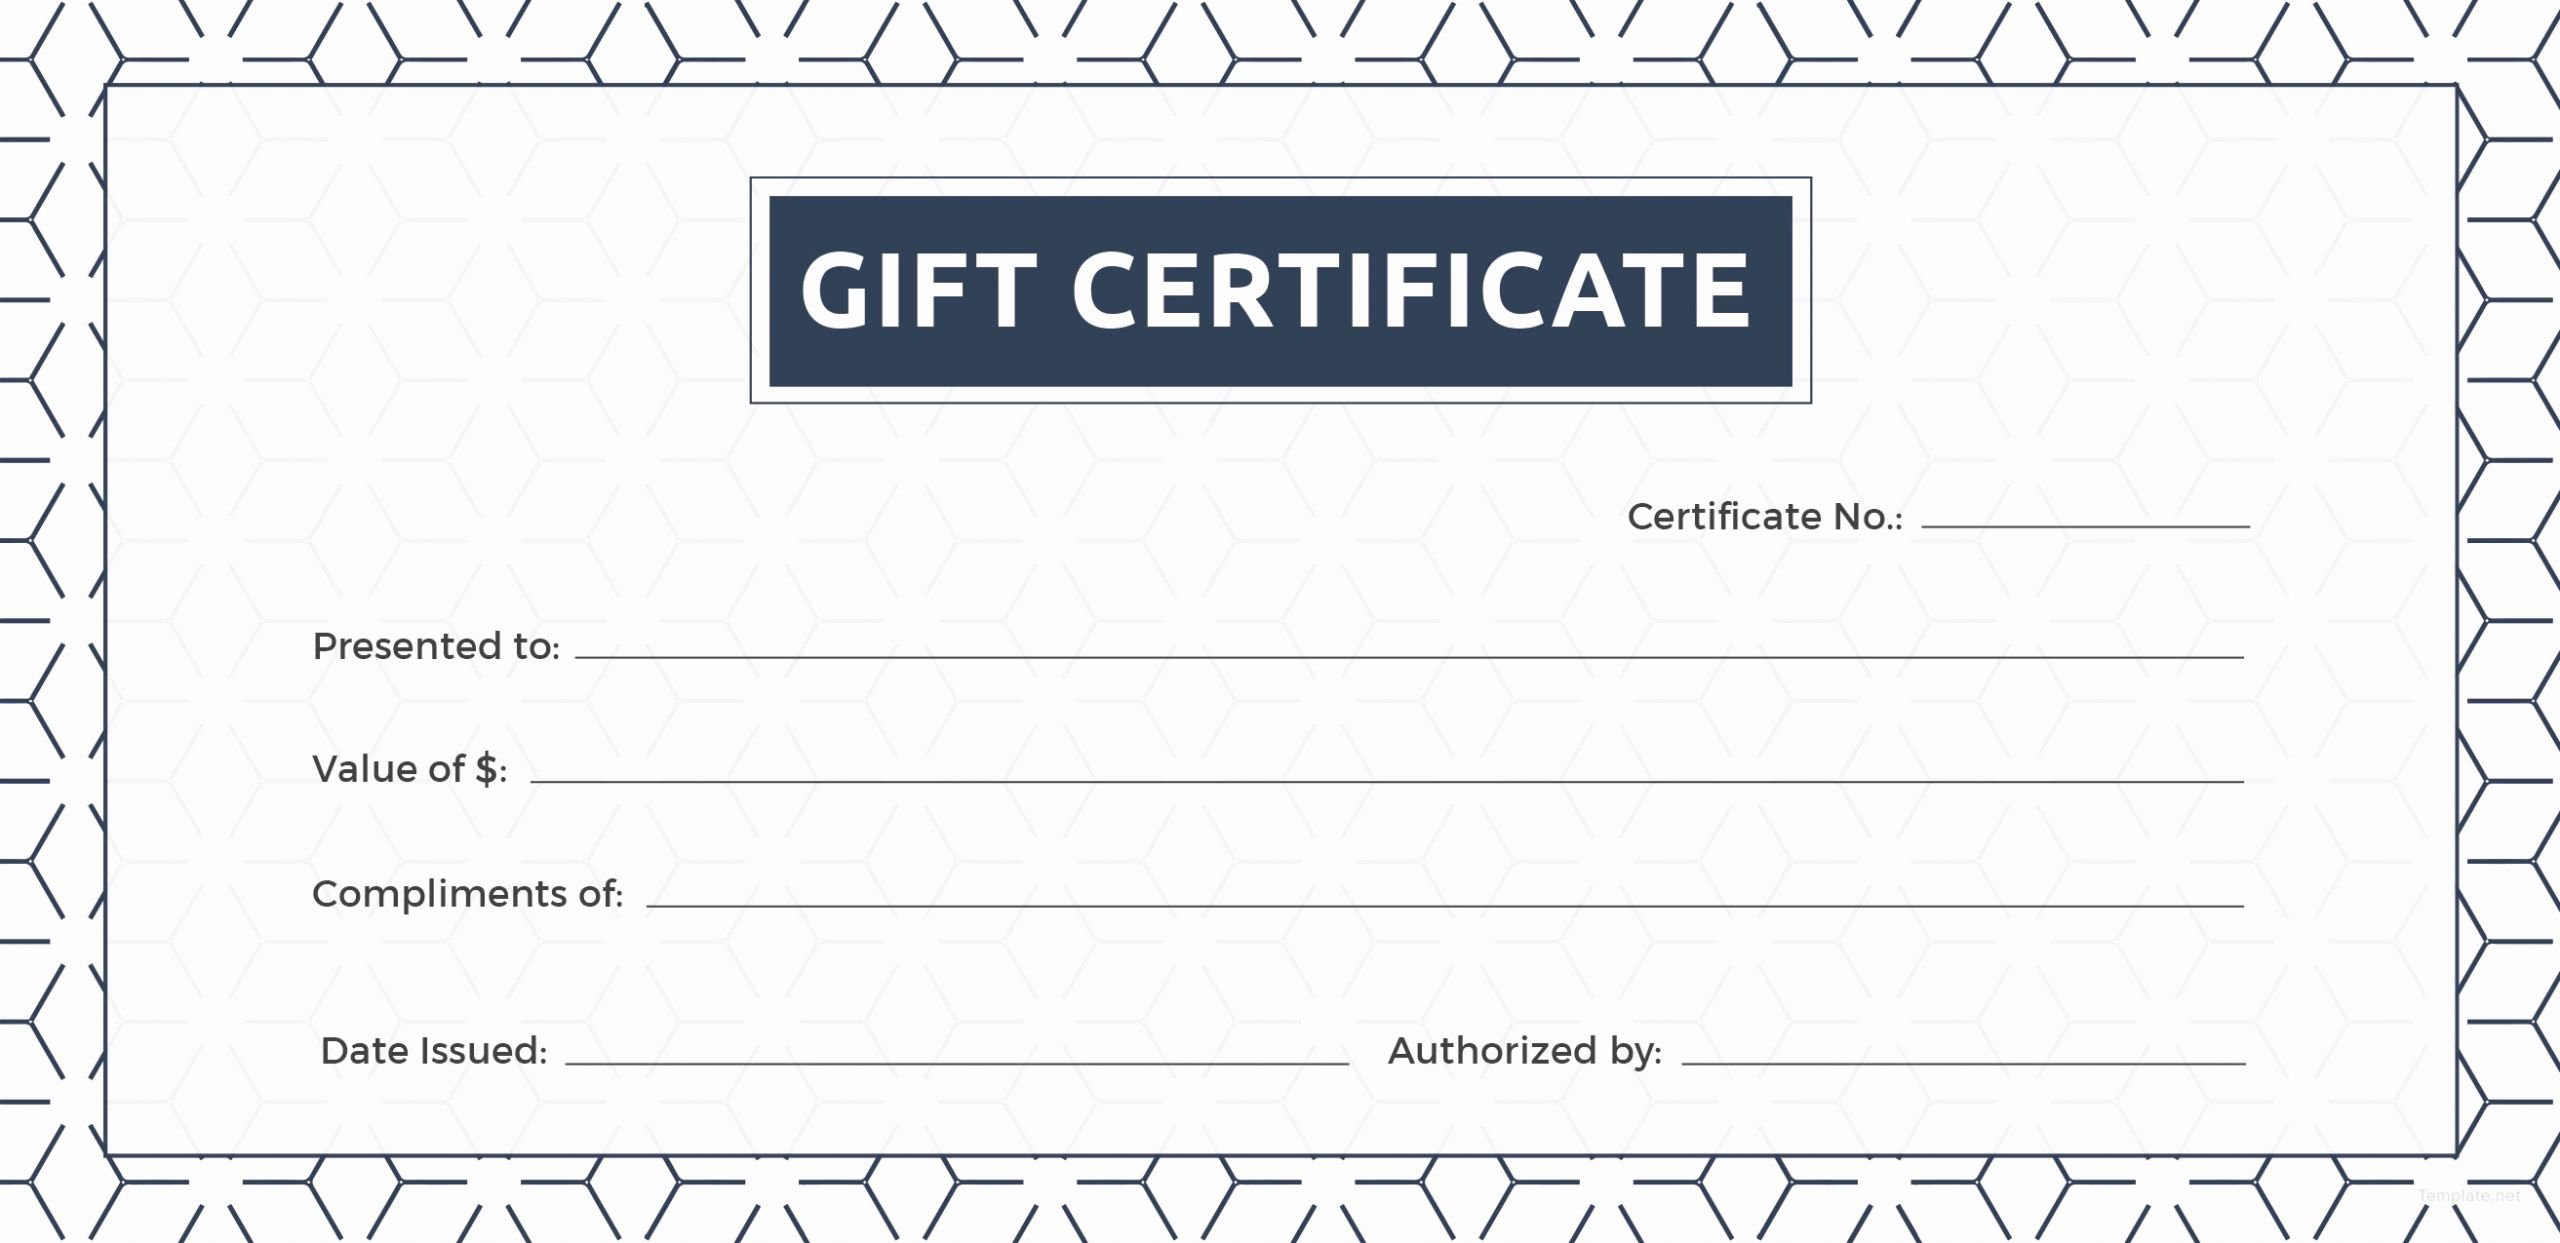 Blank Gift Certificate Paper Inspirational Gift Achievement Certificate Size A4 Per Piece andaman